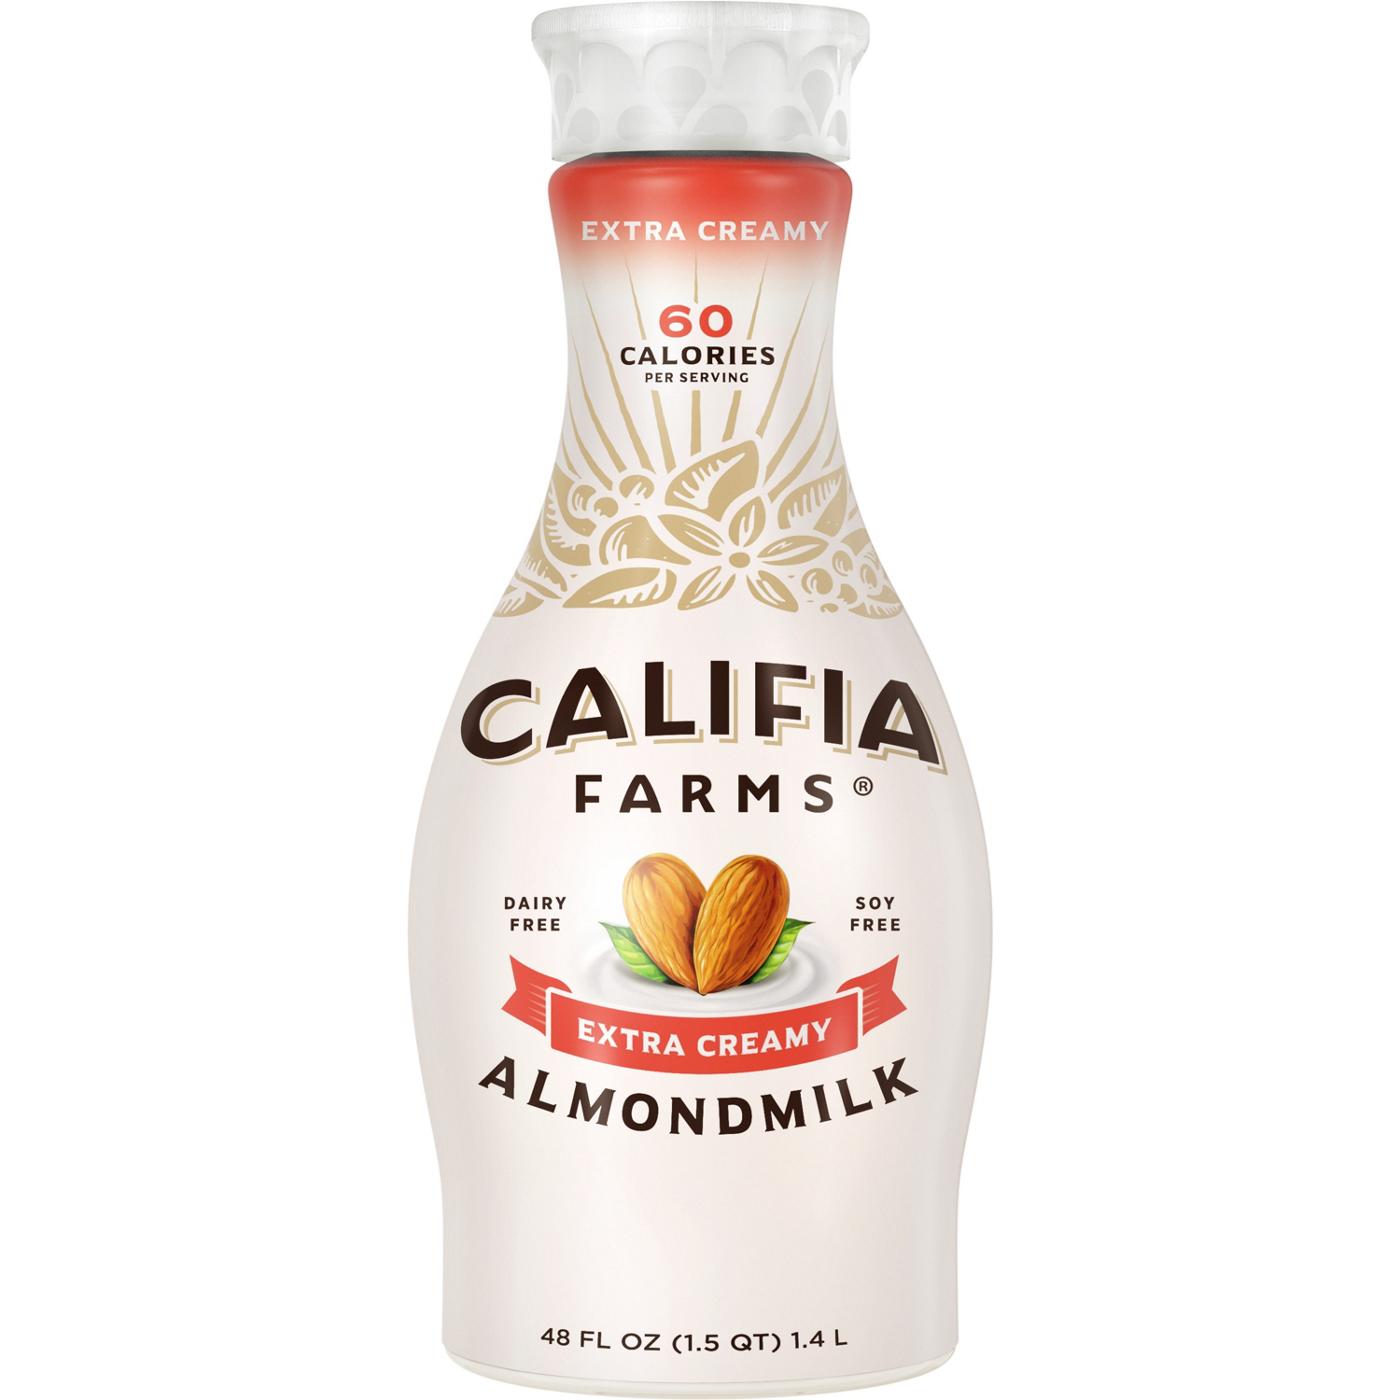 Califia Farms Extra Creamy Almond Milk; image 1 of 2